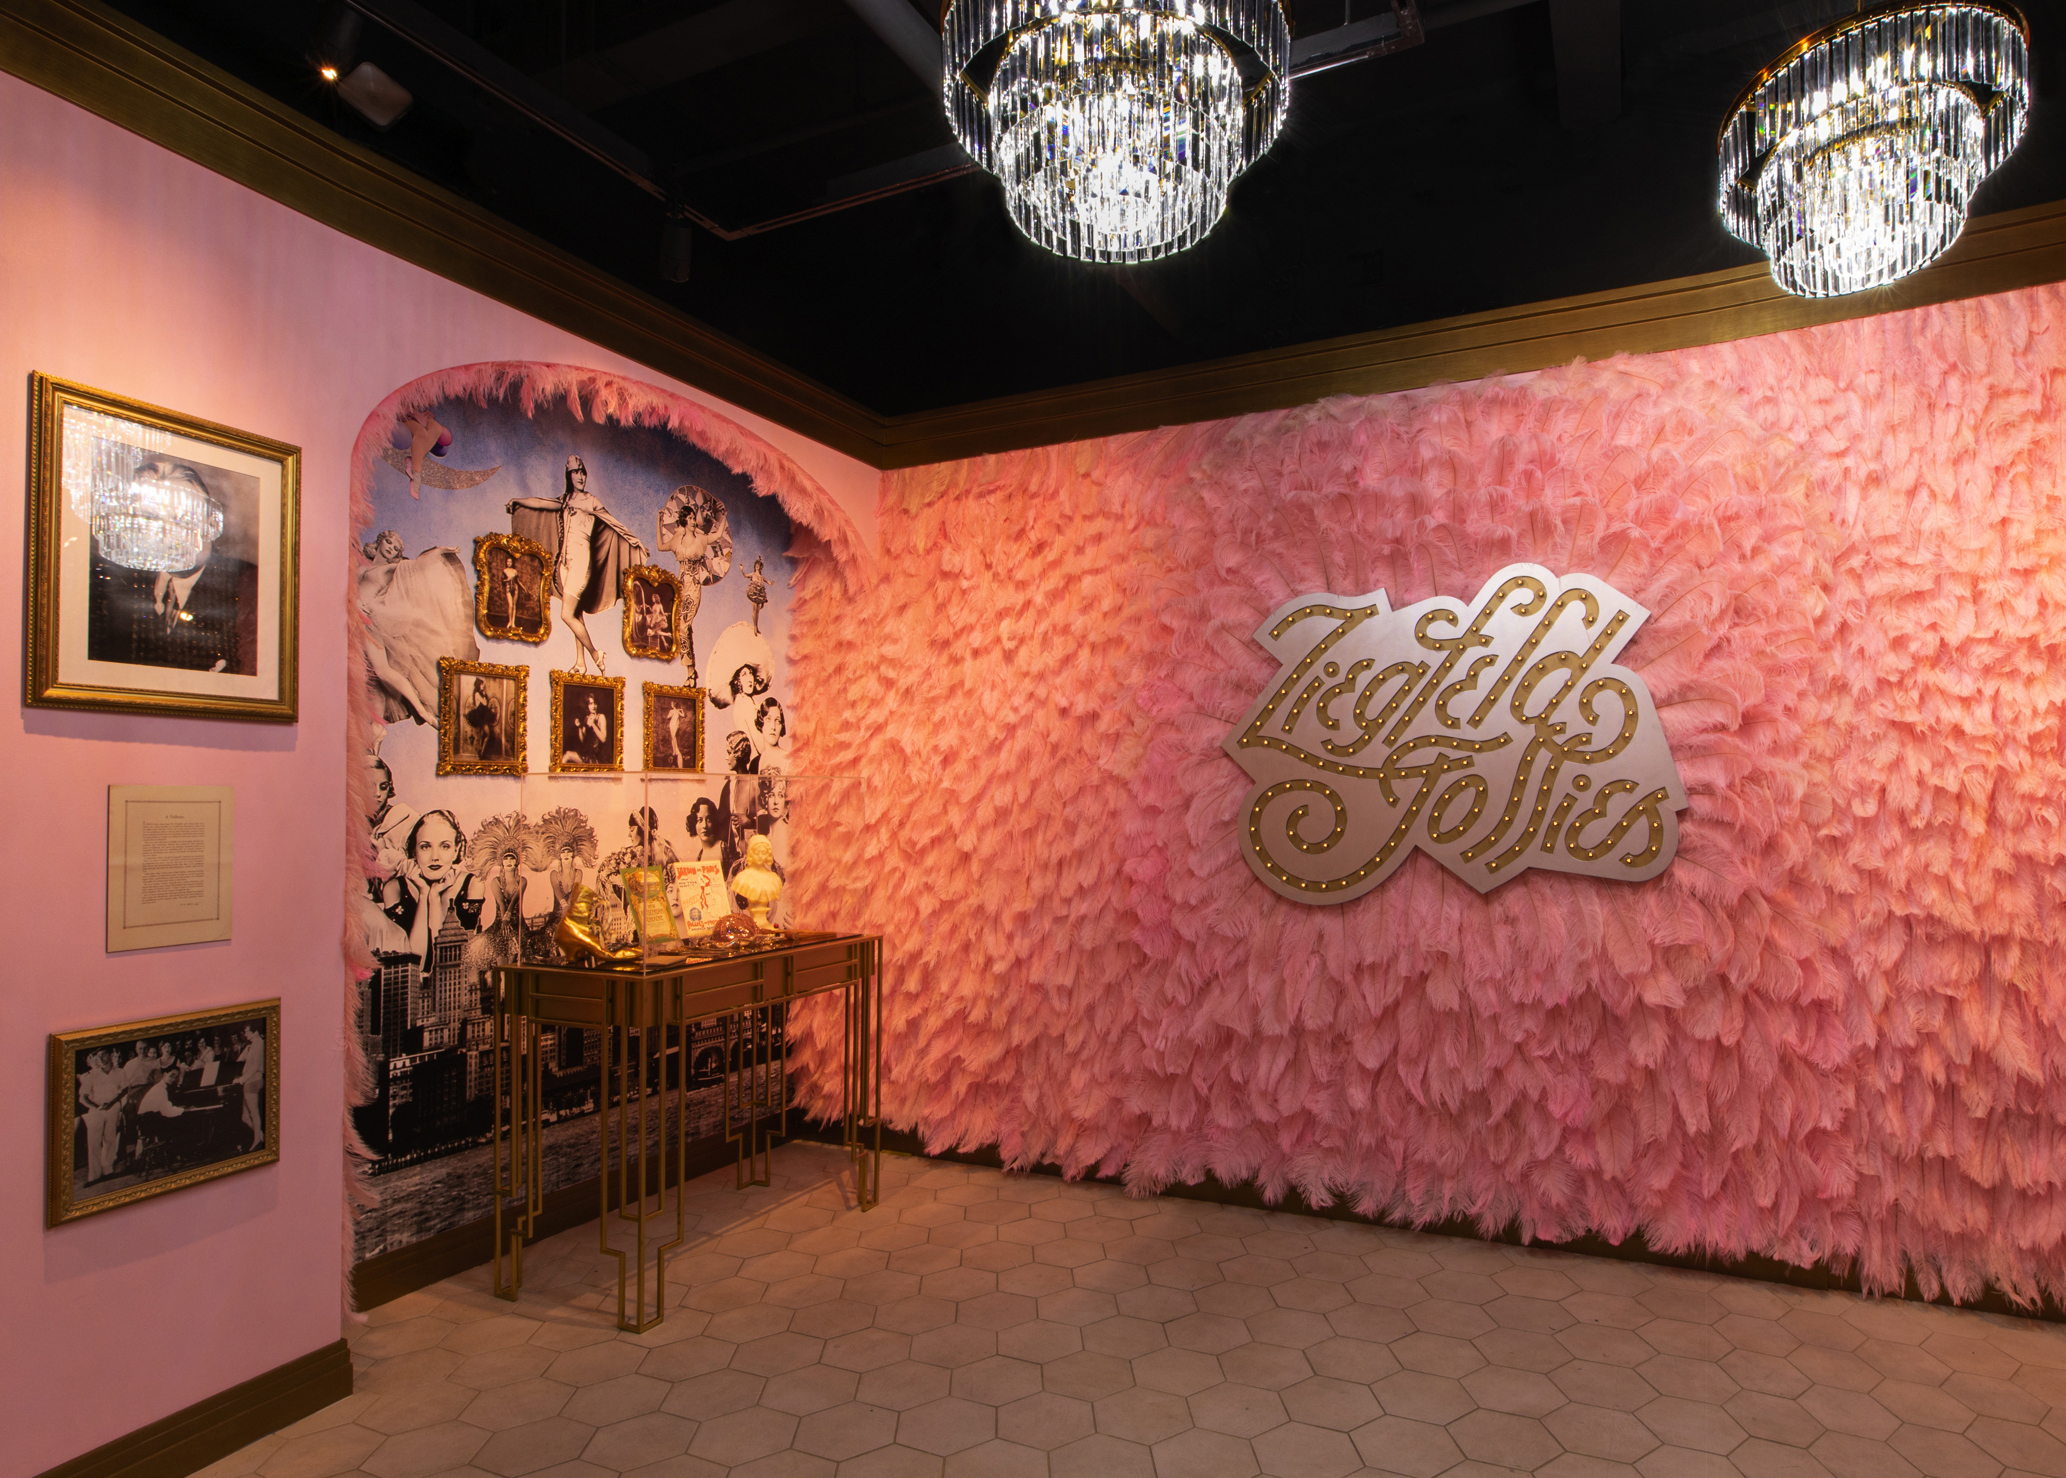 The Ziegfeld Follies room. Photo by Monique Carboni.